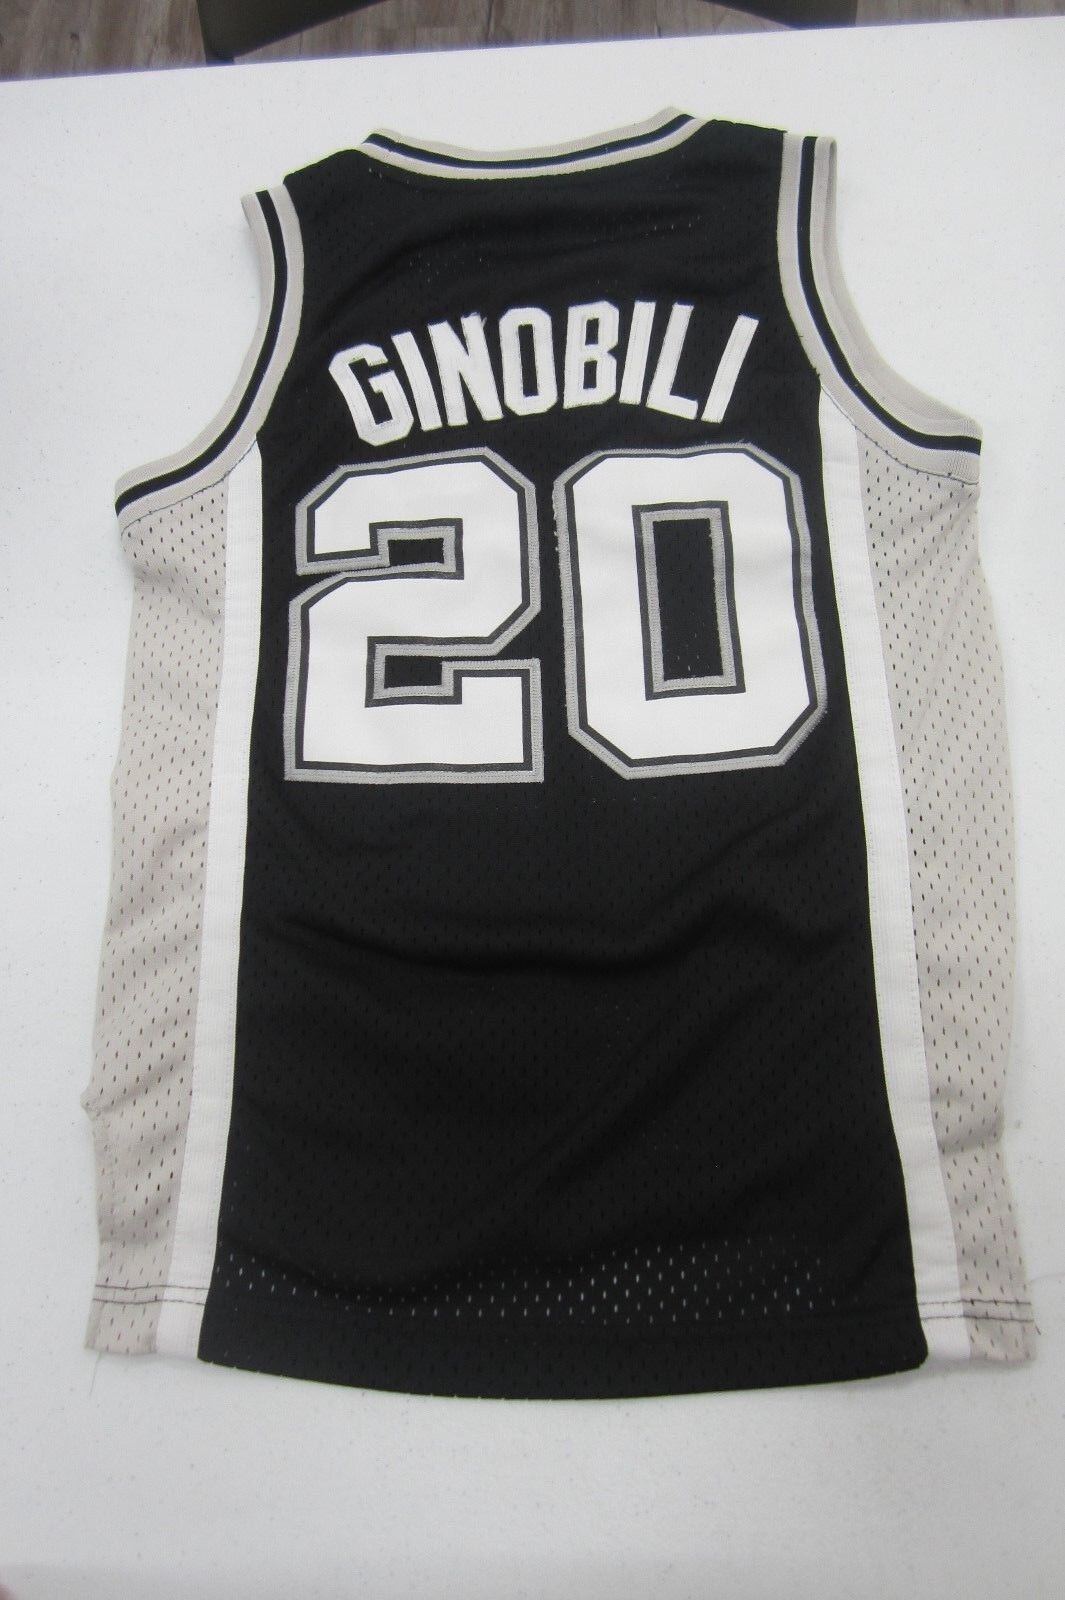 *NICE* San Antonio Spurs Manu Ginobili Reebok Sewn NBA Basketball Jersey Youth S